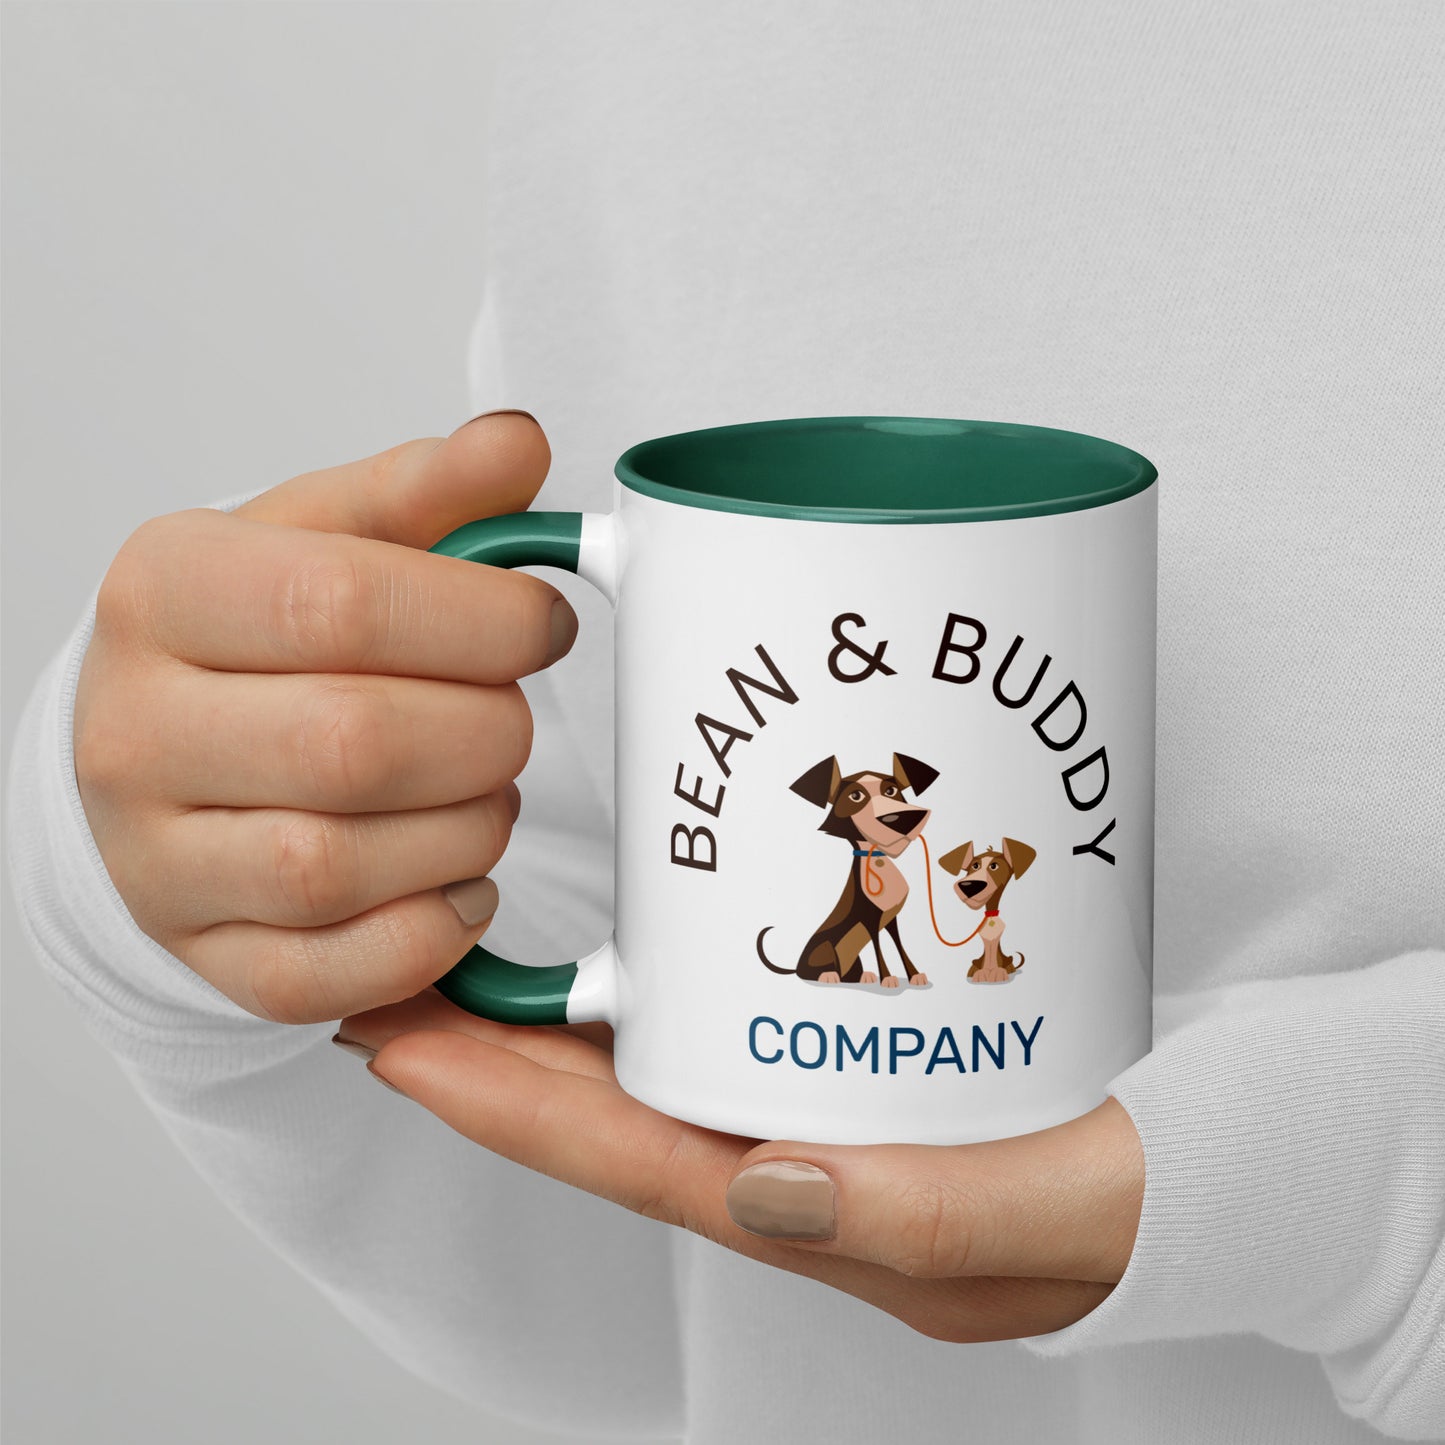 Bean & Buddy Mug with Color Inside